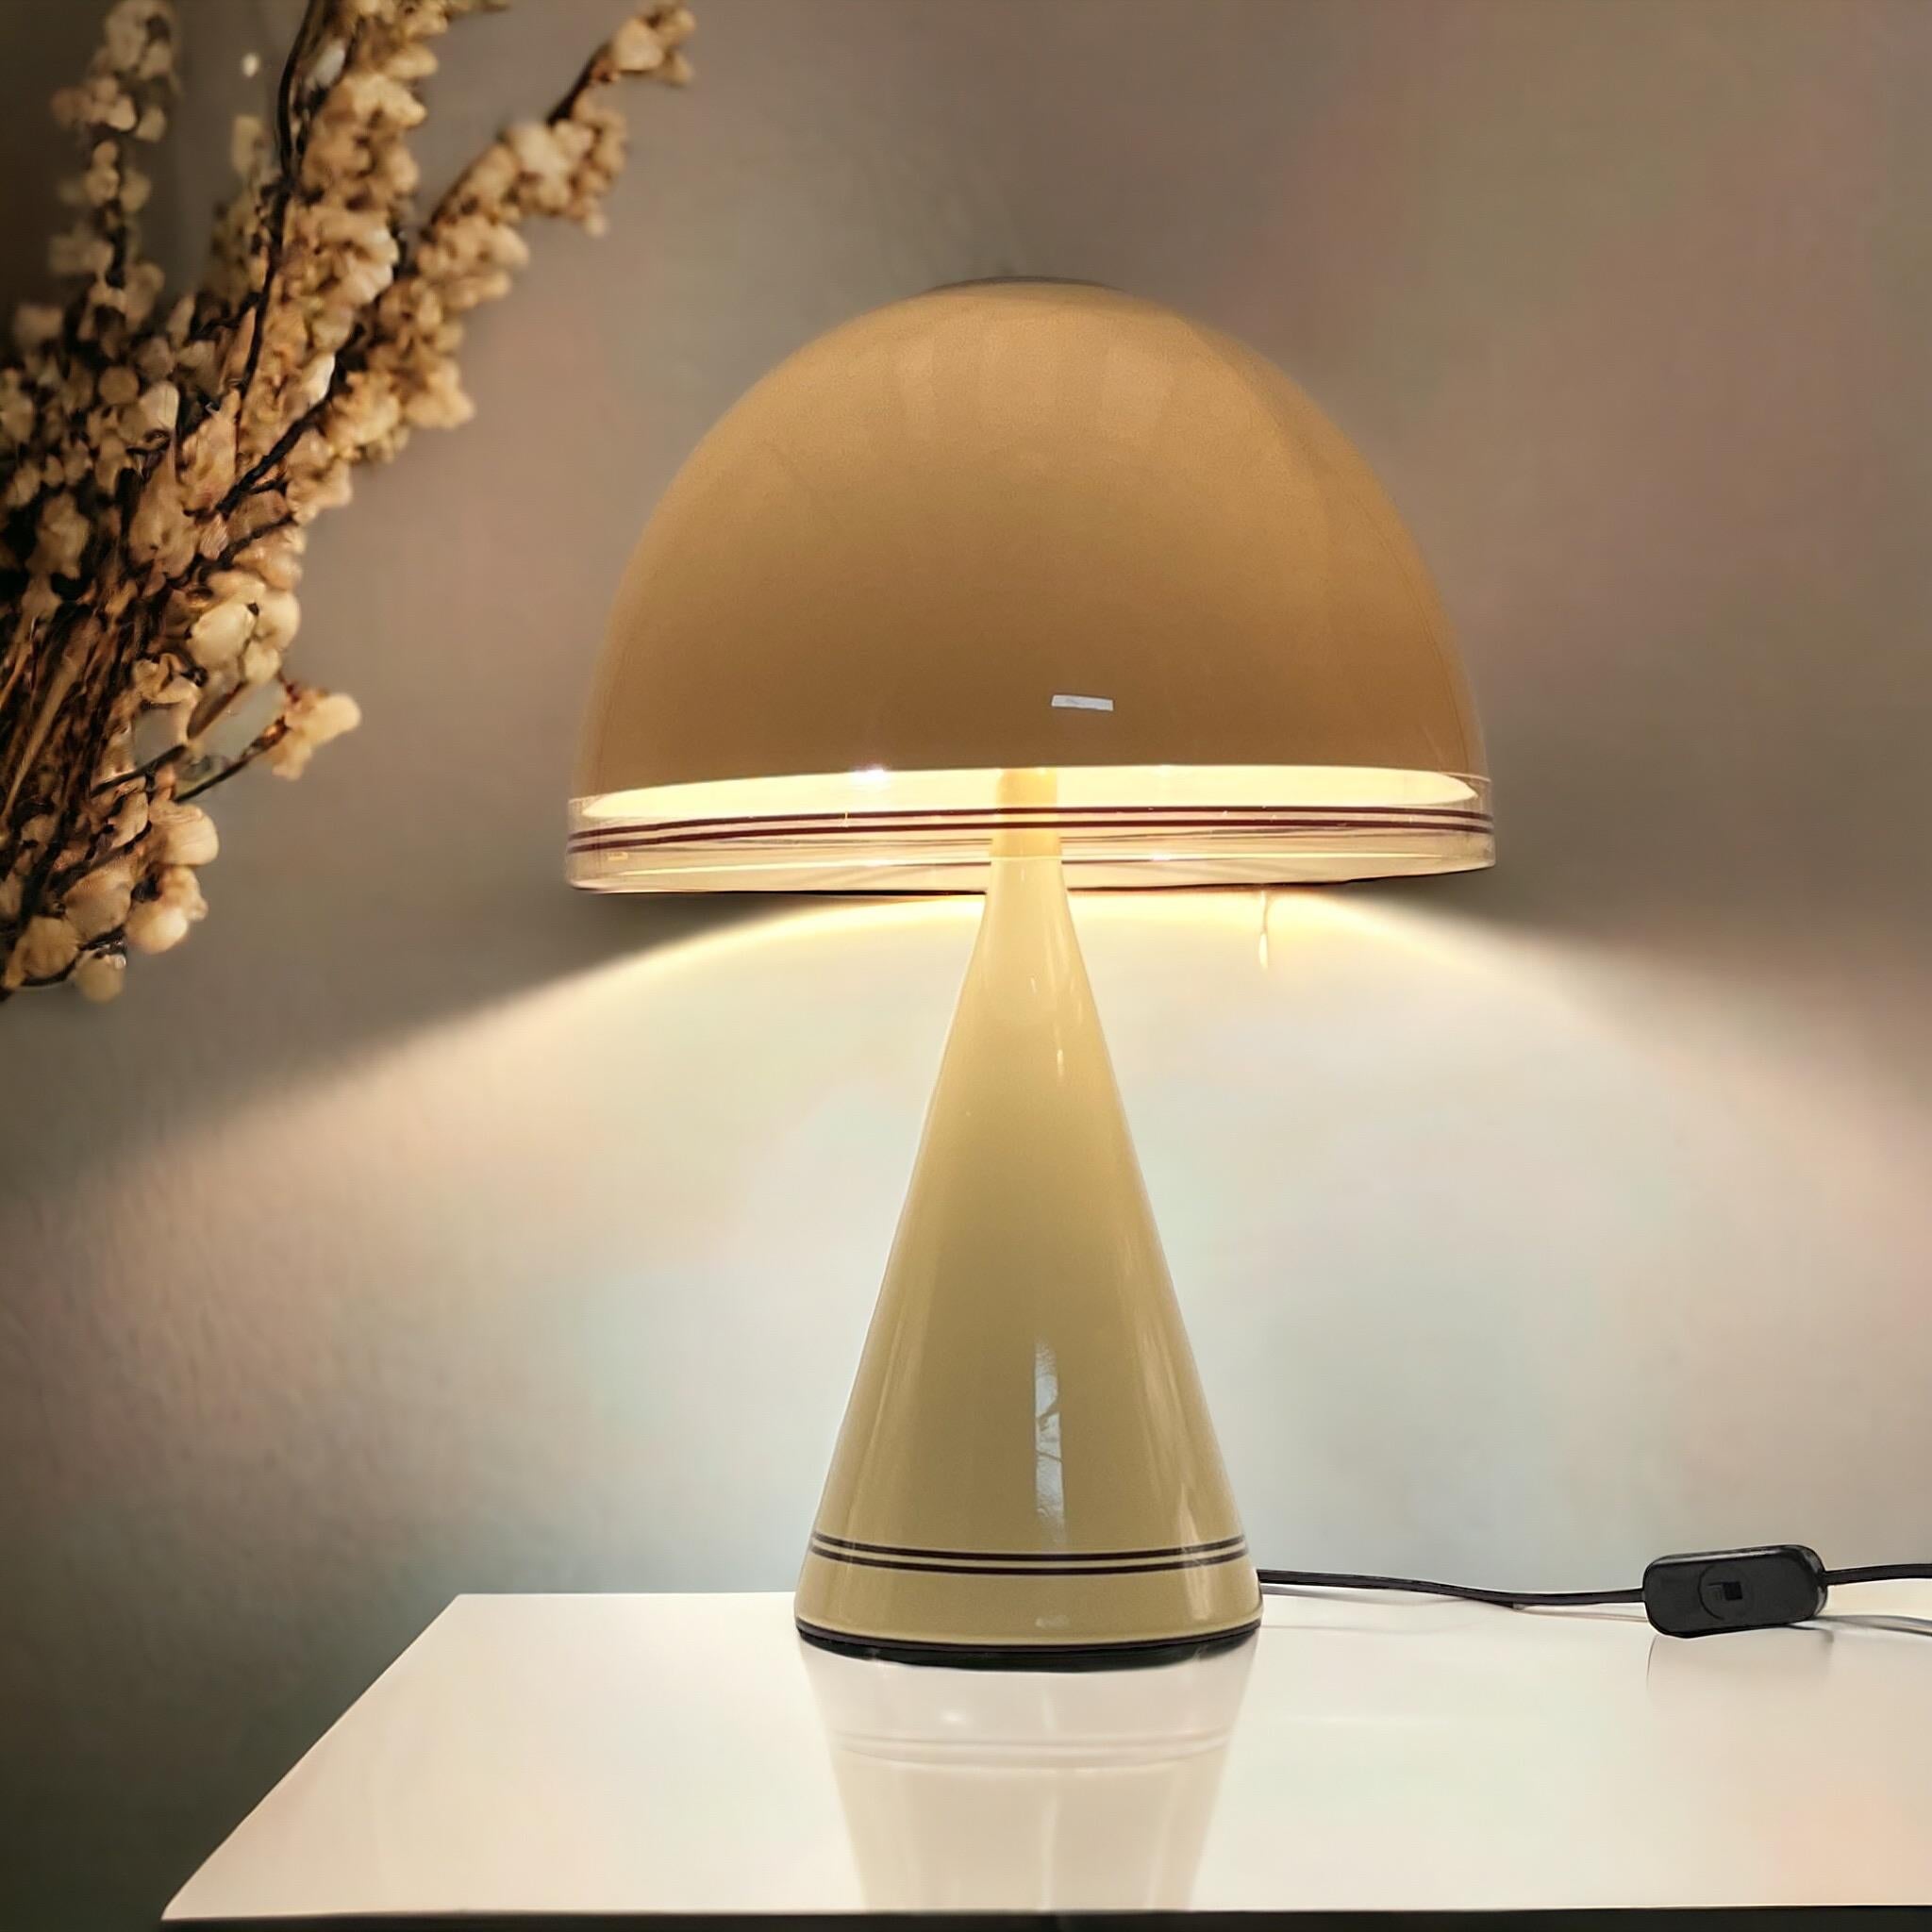 Late 20th Century Iconic Mushroom 70s Lamp ‘Baobab’ by iGuzzini - Italian Space Age Iconic Lamp For Sale